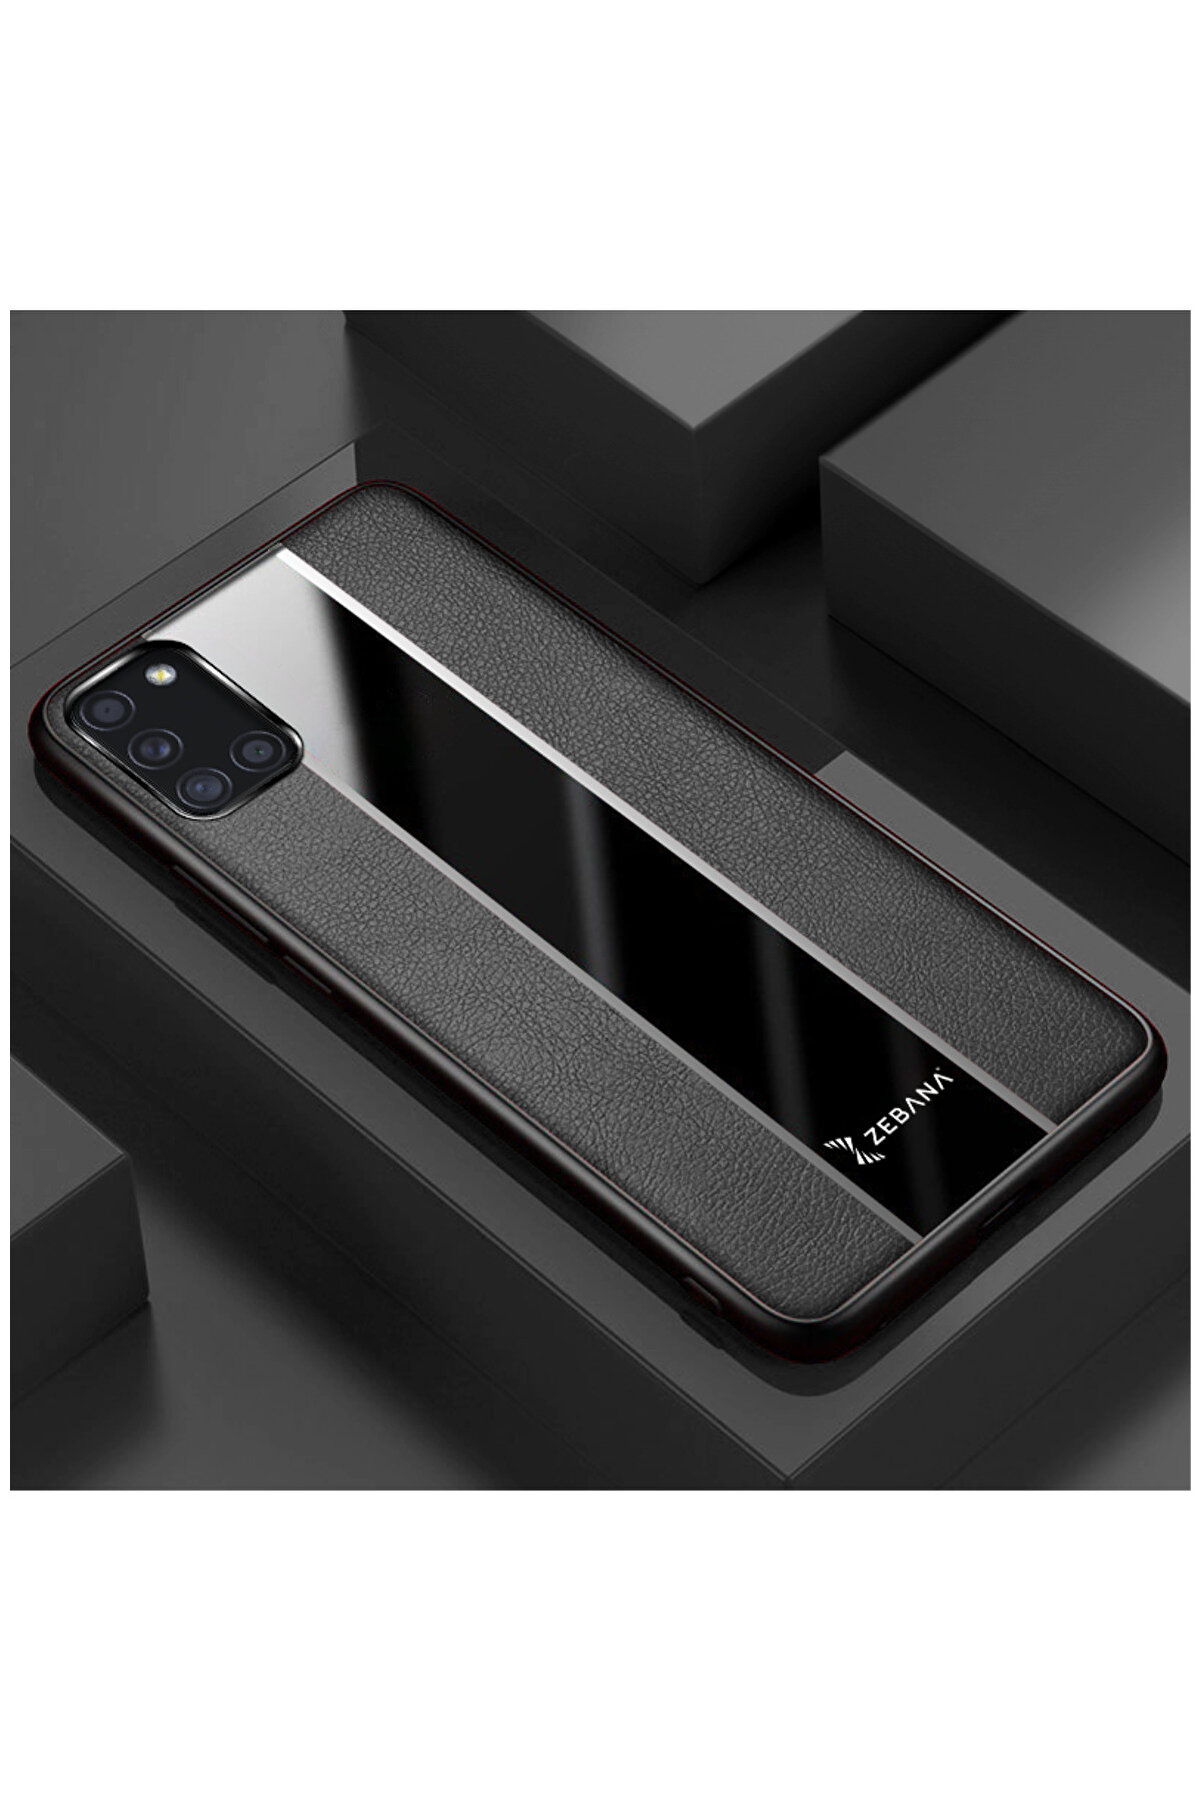 Dara Aksesuar Samsung Galaxy A31 Uyumlu Kılıf Zebana Premium Deri Kılıf Siyah